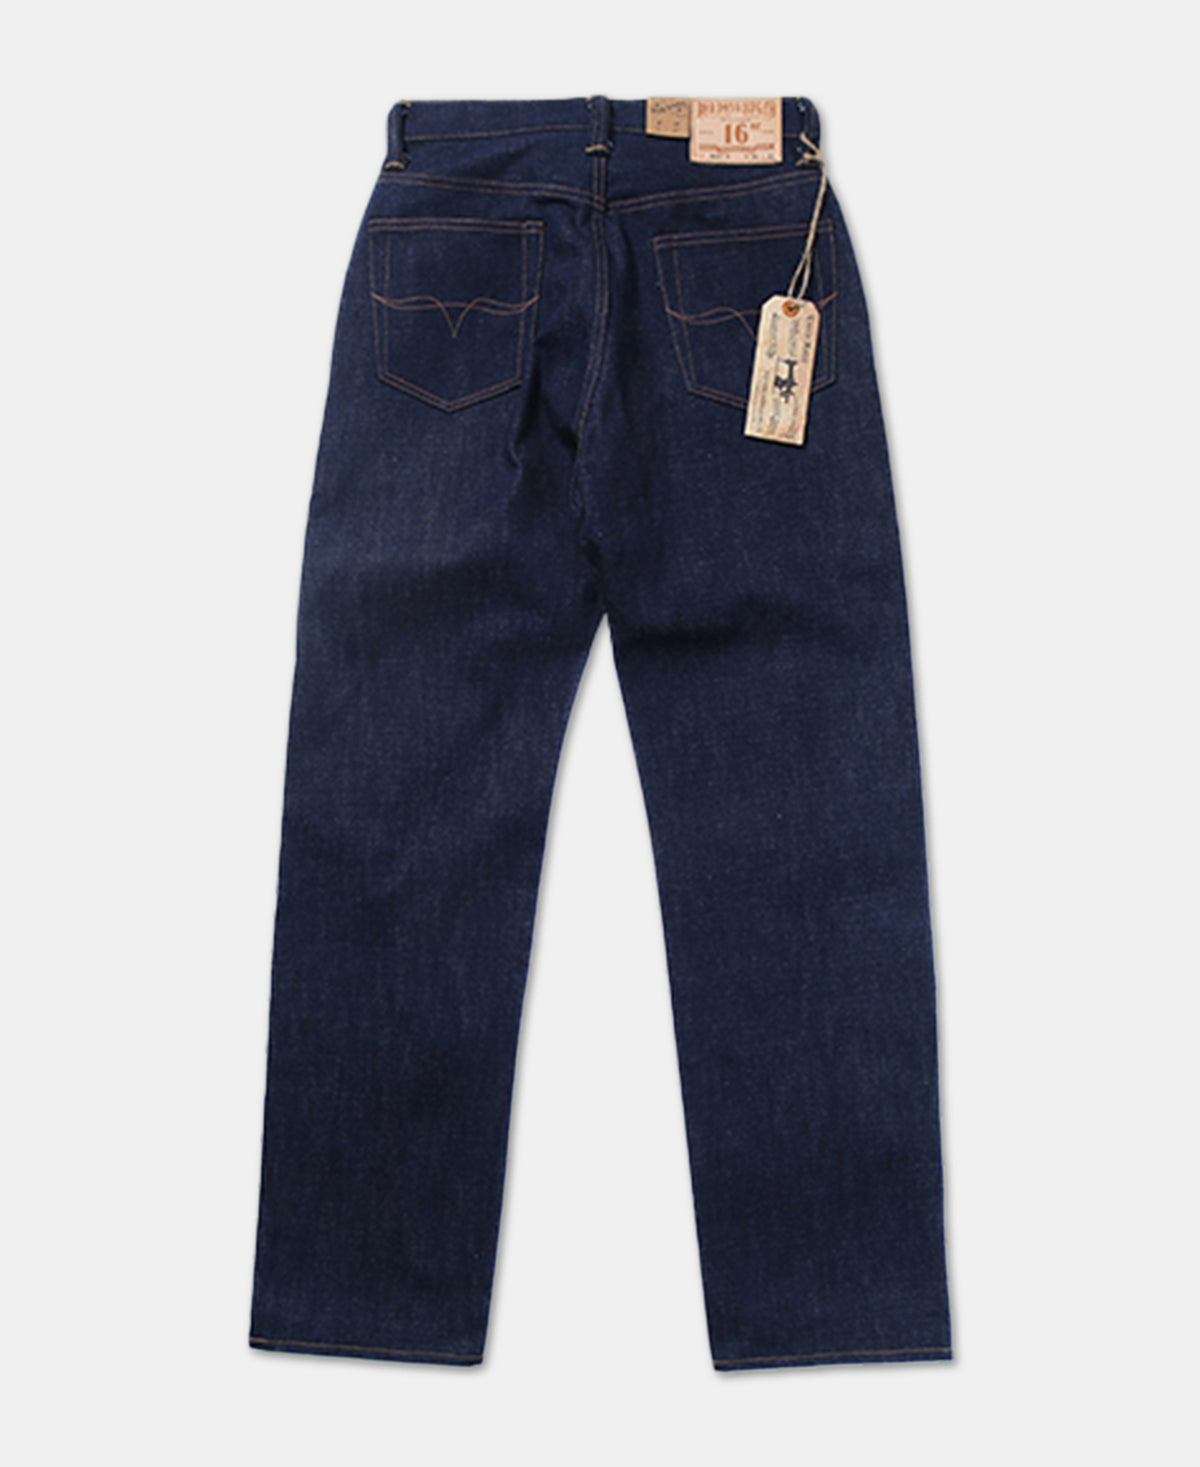 Lot N037-9 1966 Model 16 oz Selvedge Denim Jeans